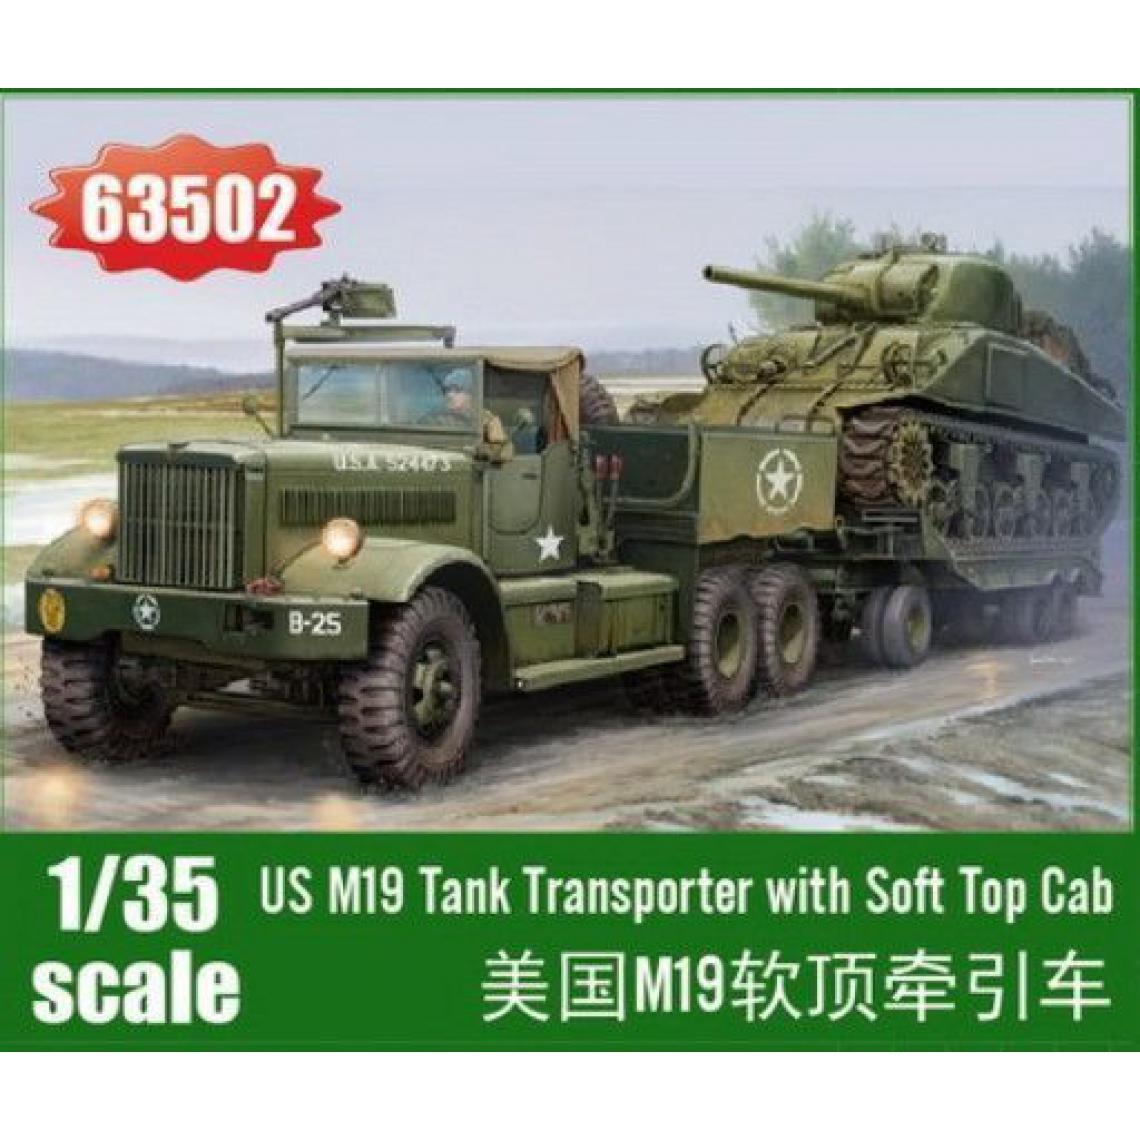 I Love Kit - M19 Tank Transporter with Soft Top Cab - 1:35e - I LOVE KIT - Accessoires et pièces